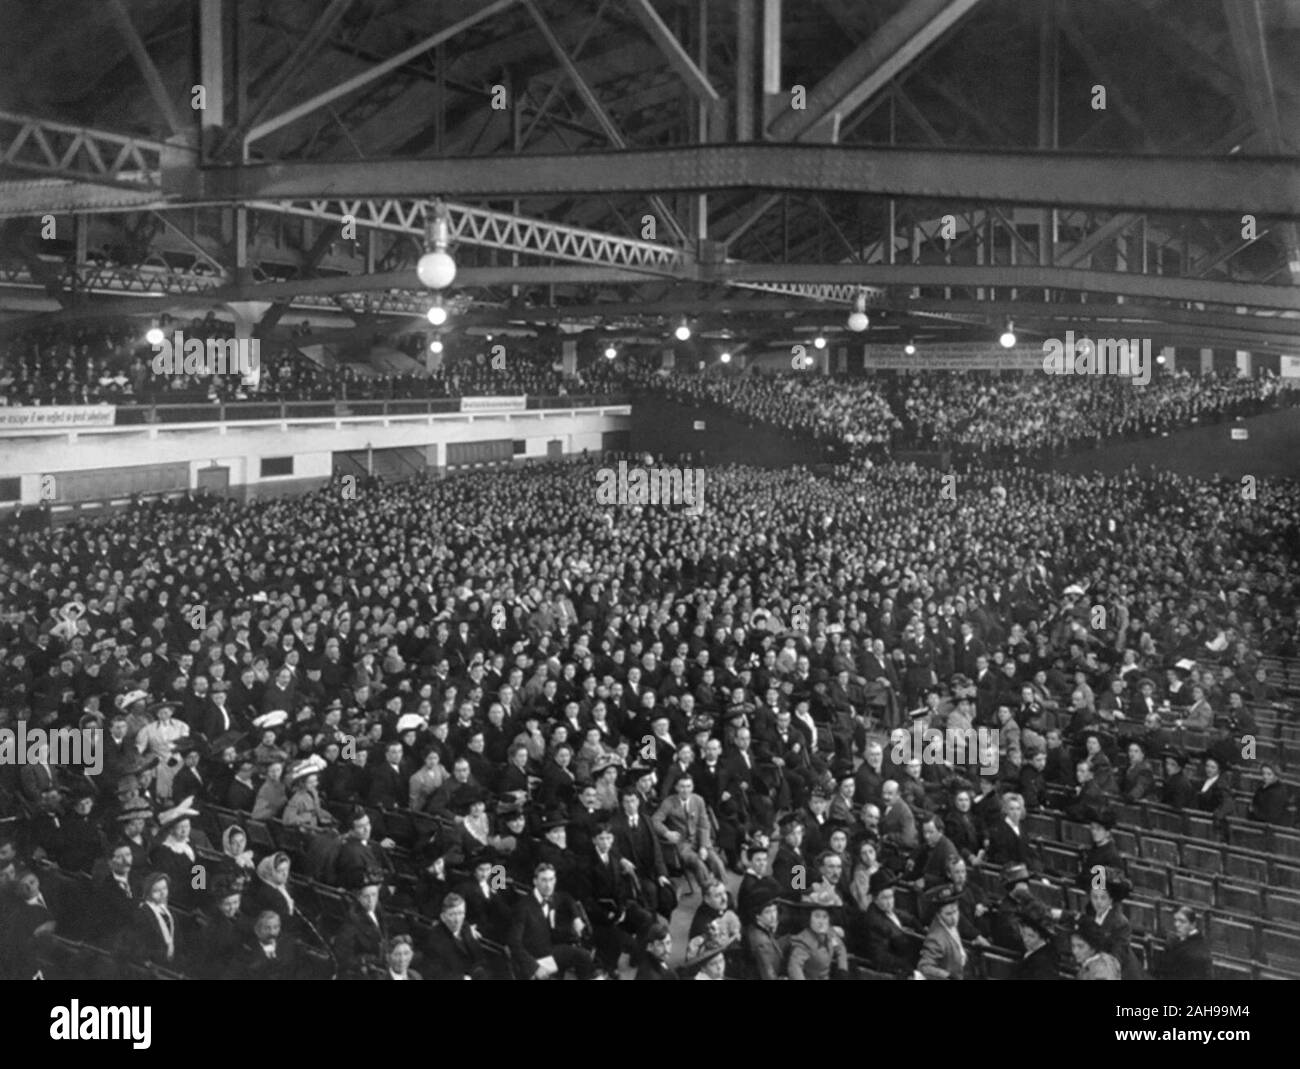 Gipsy Smith evangelistischen Revival Meetings am 7. Regiment Armory in Chicago, Illinois am 13. Oktober 1909. Stockfoto